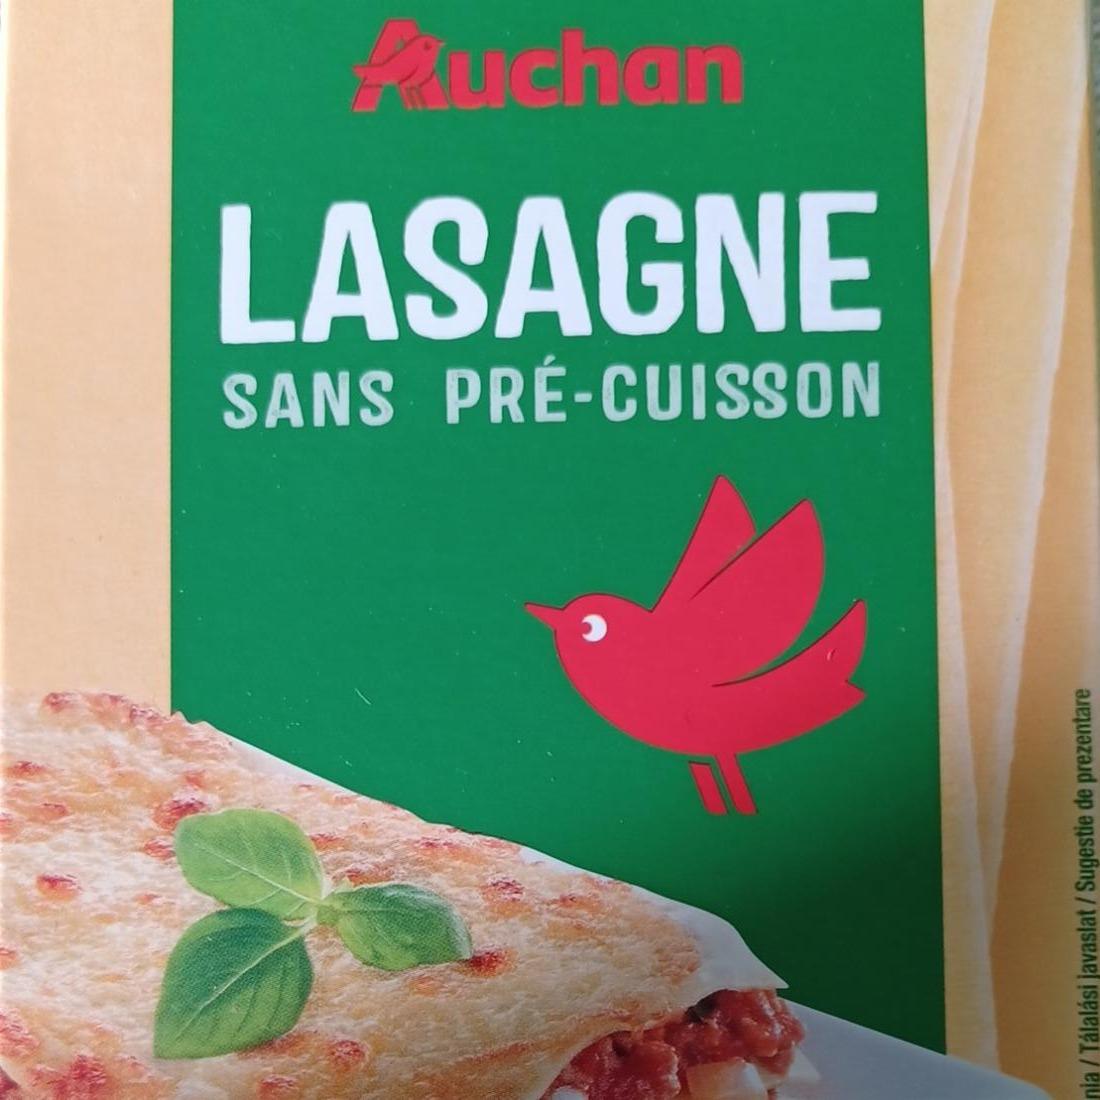 Zdjęcia - Lasagne sans pre-cuisson Auchan